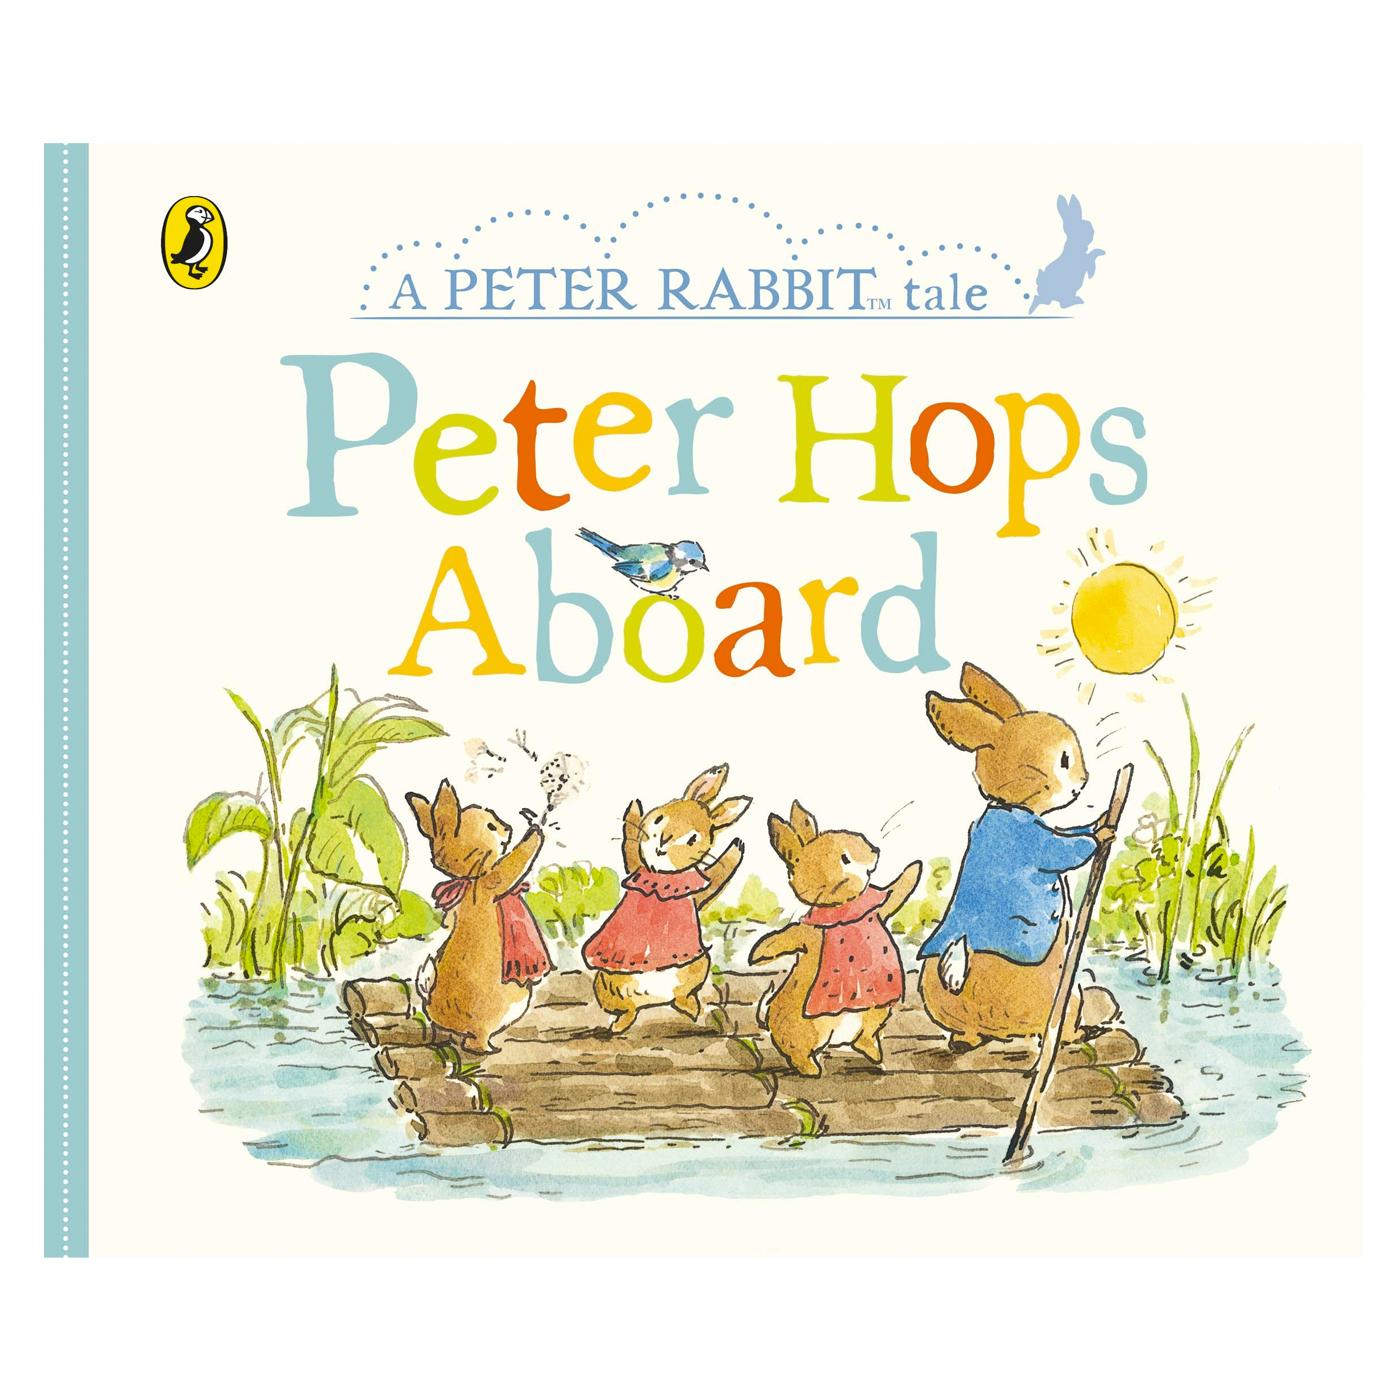  Peter Rabbit Tales - Peter Hops Aboard